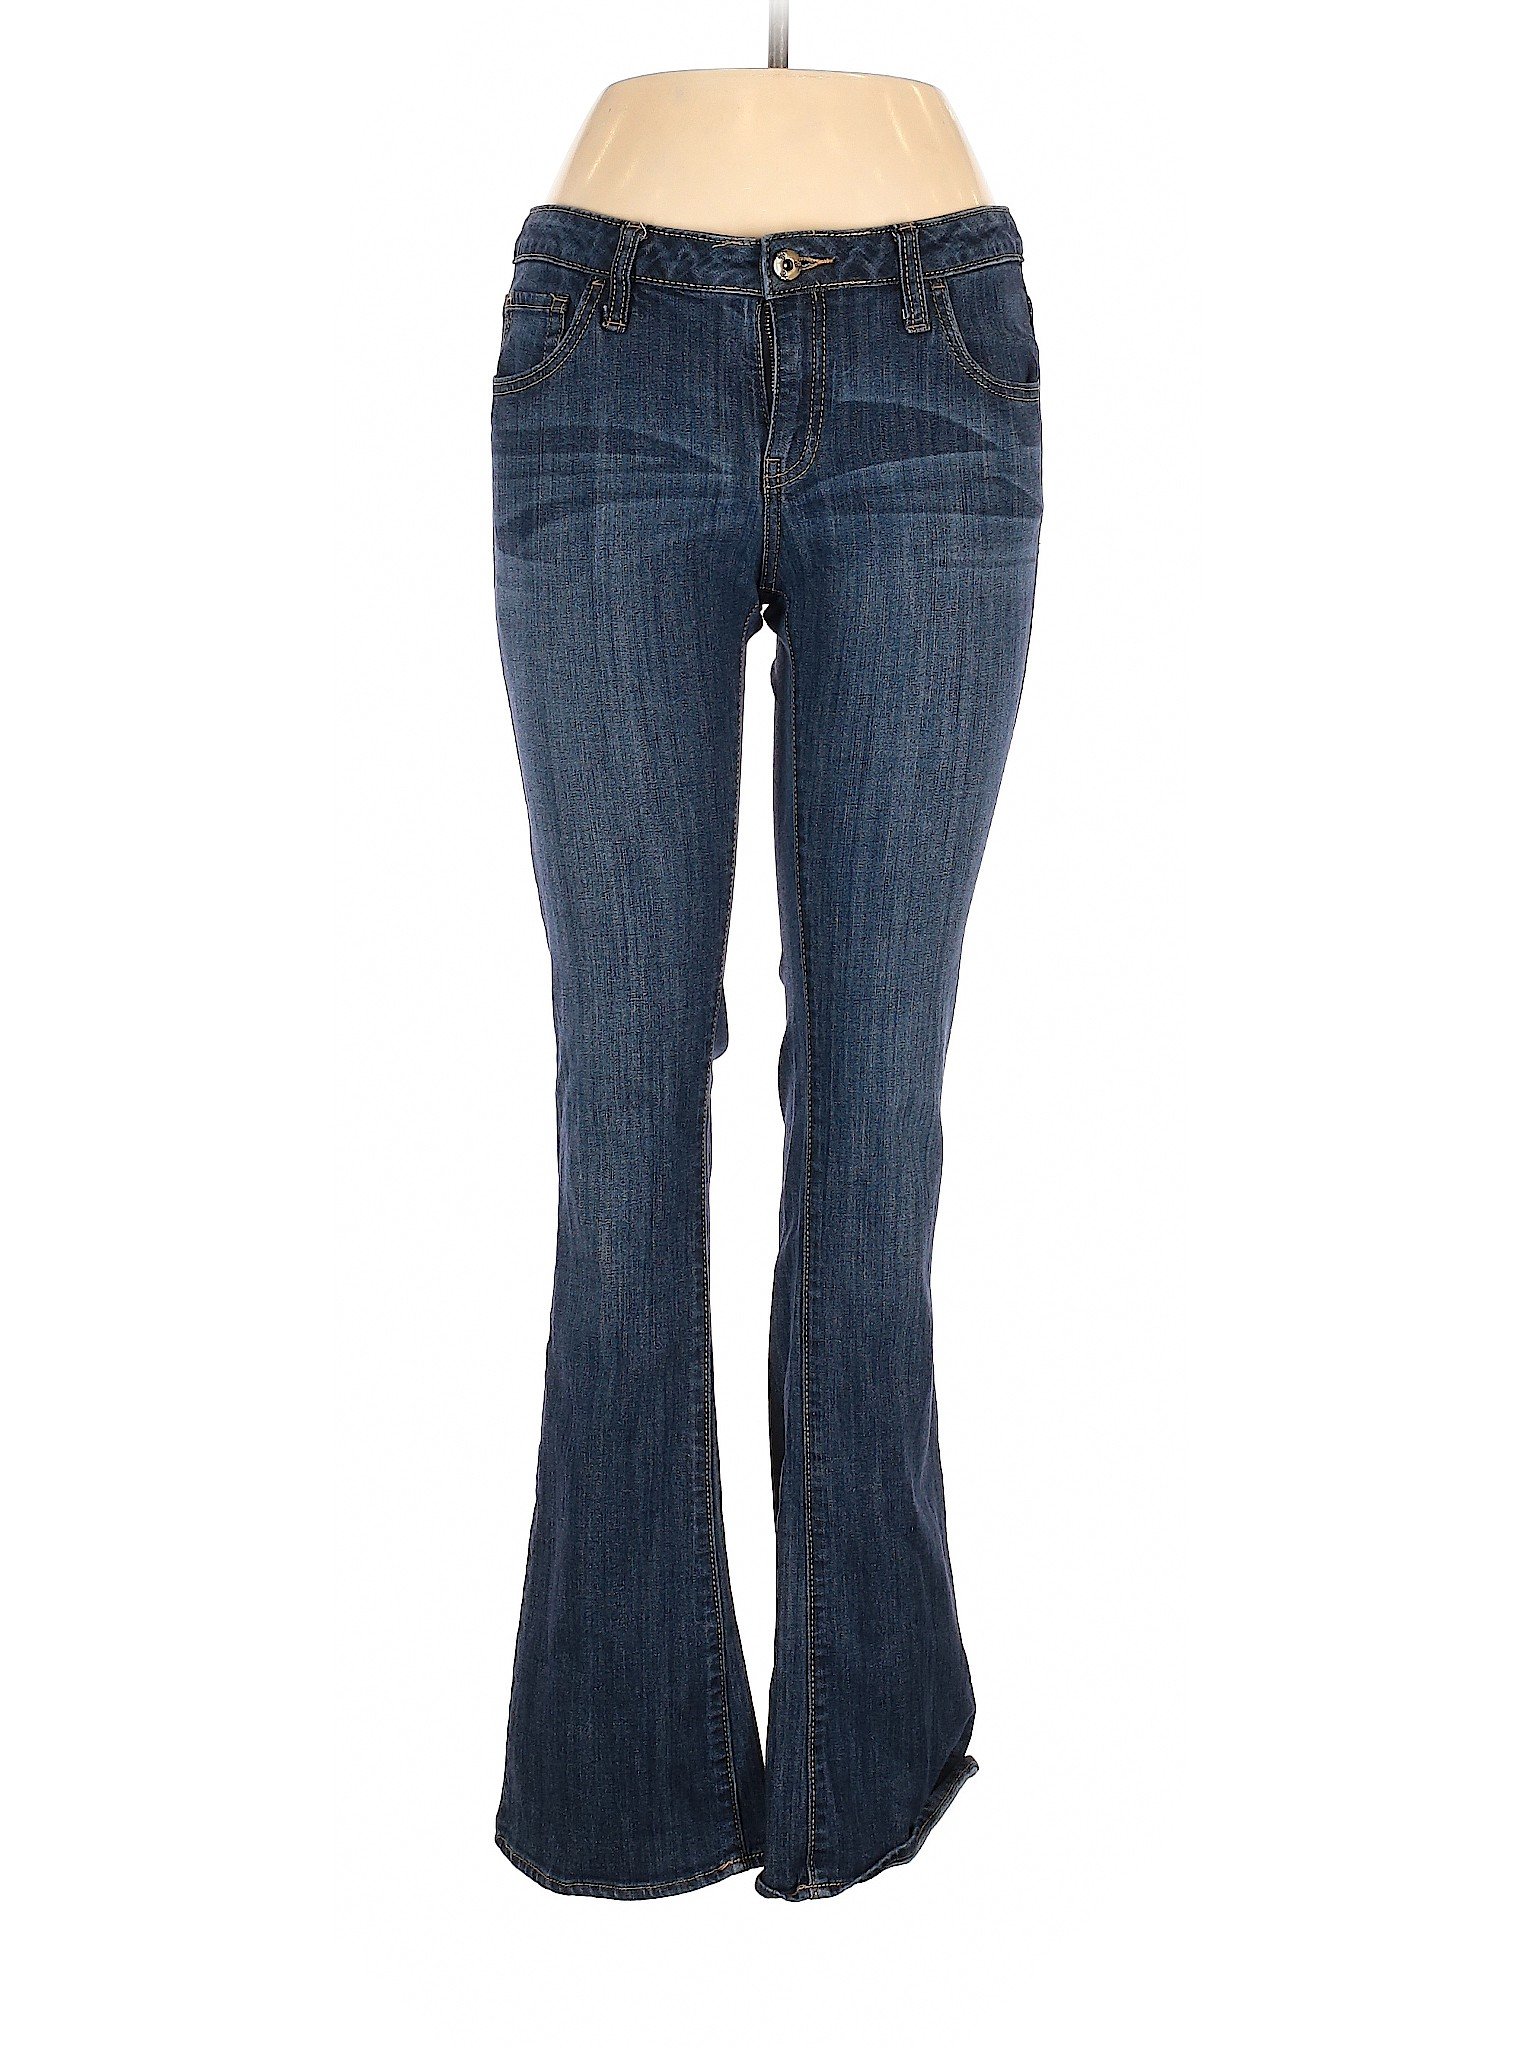 Simply Vera Vera Wang Women Blue Jeans 6 | eBay